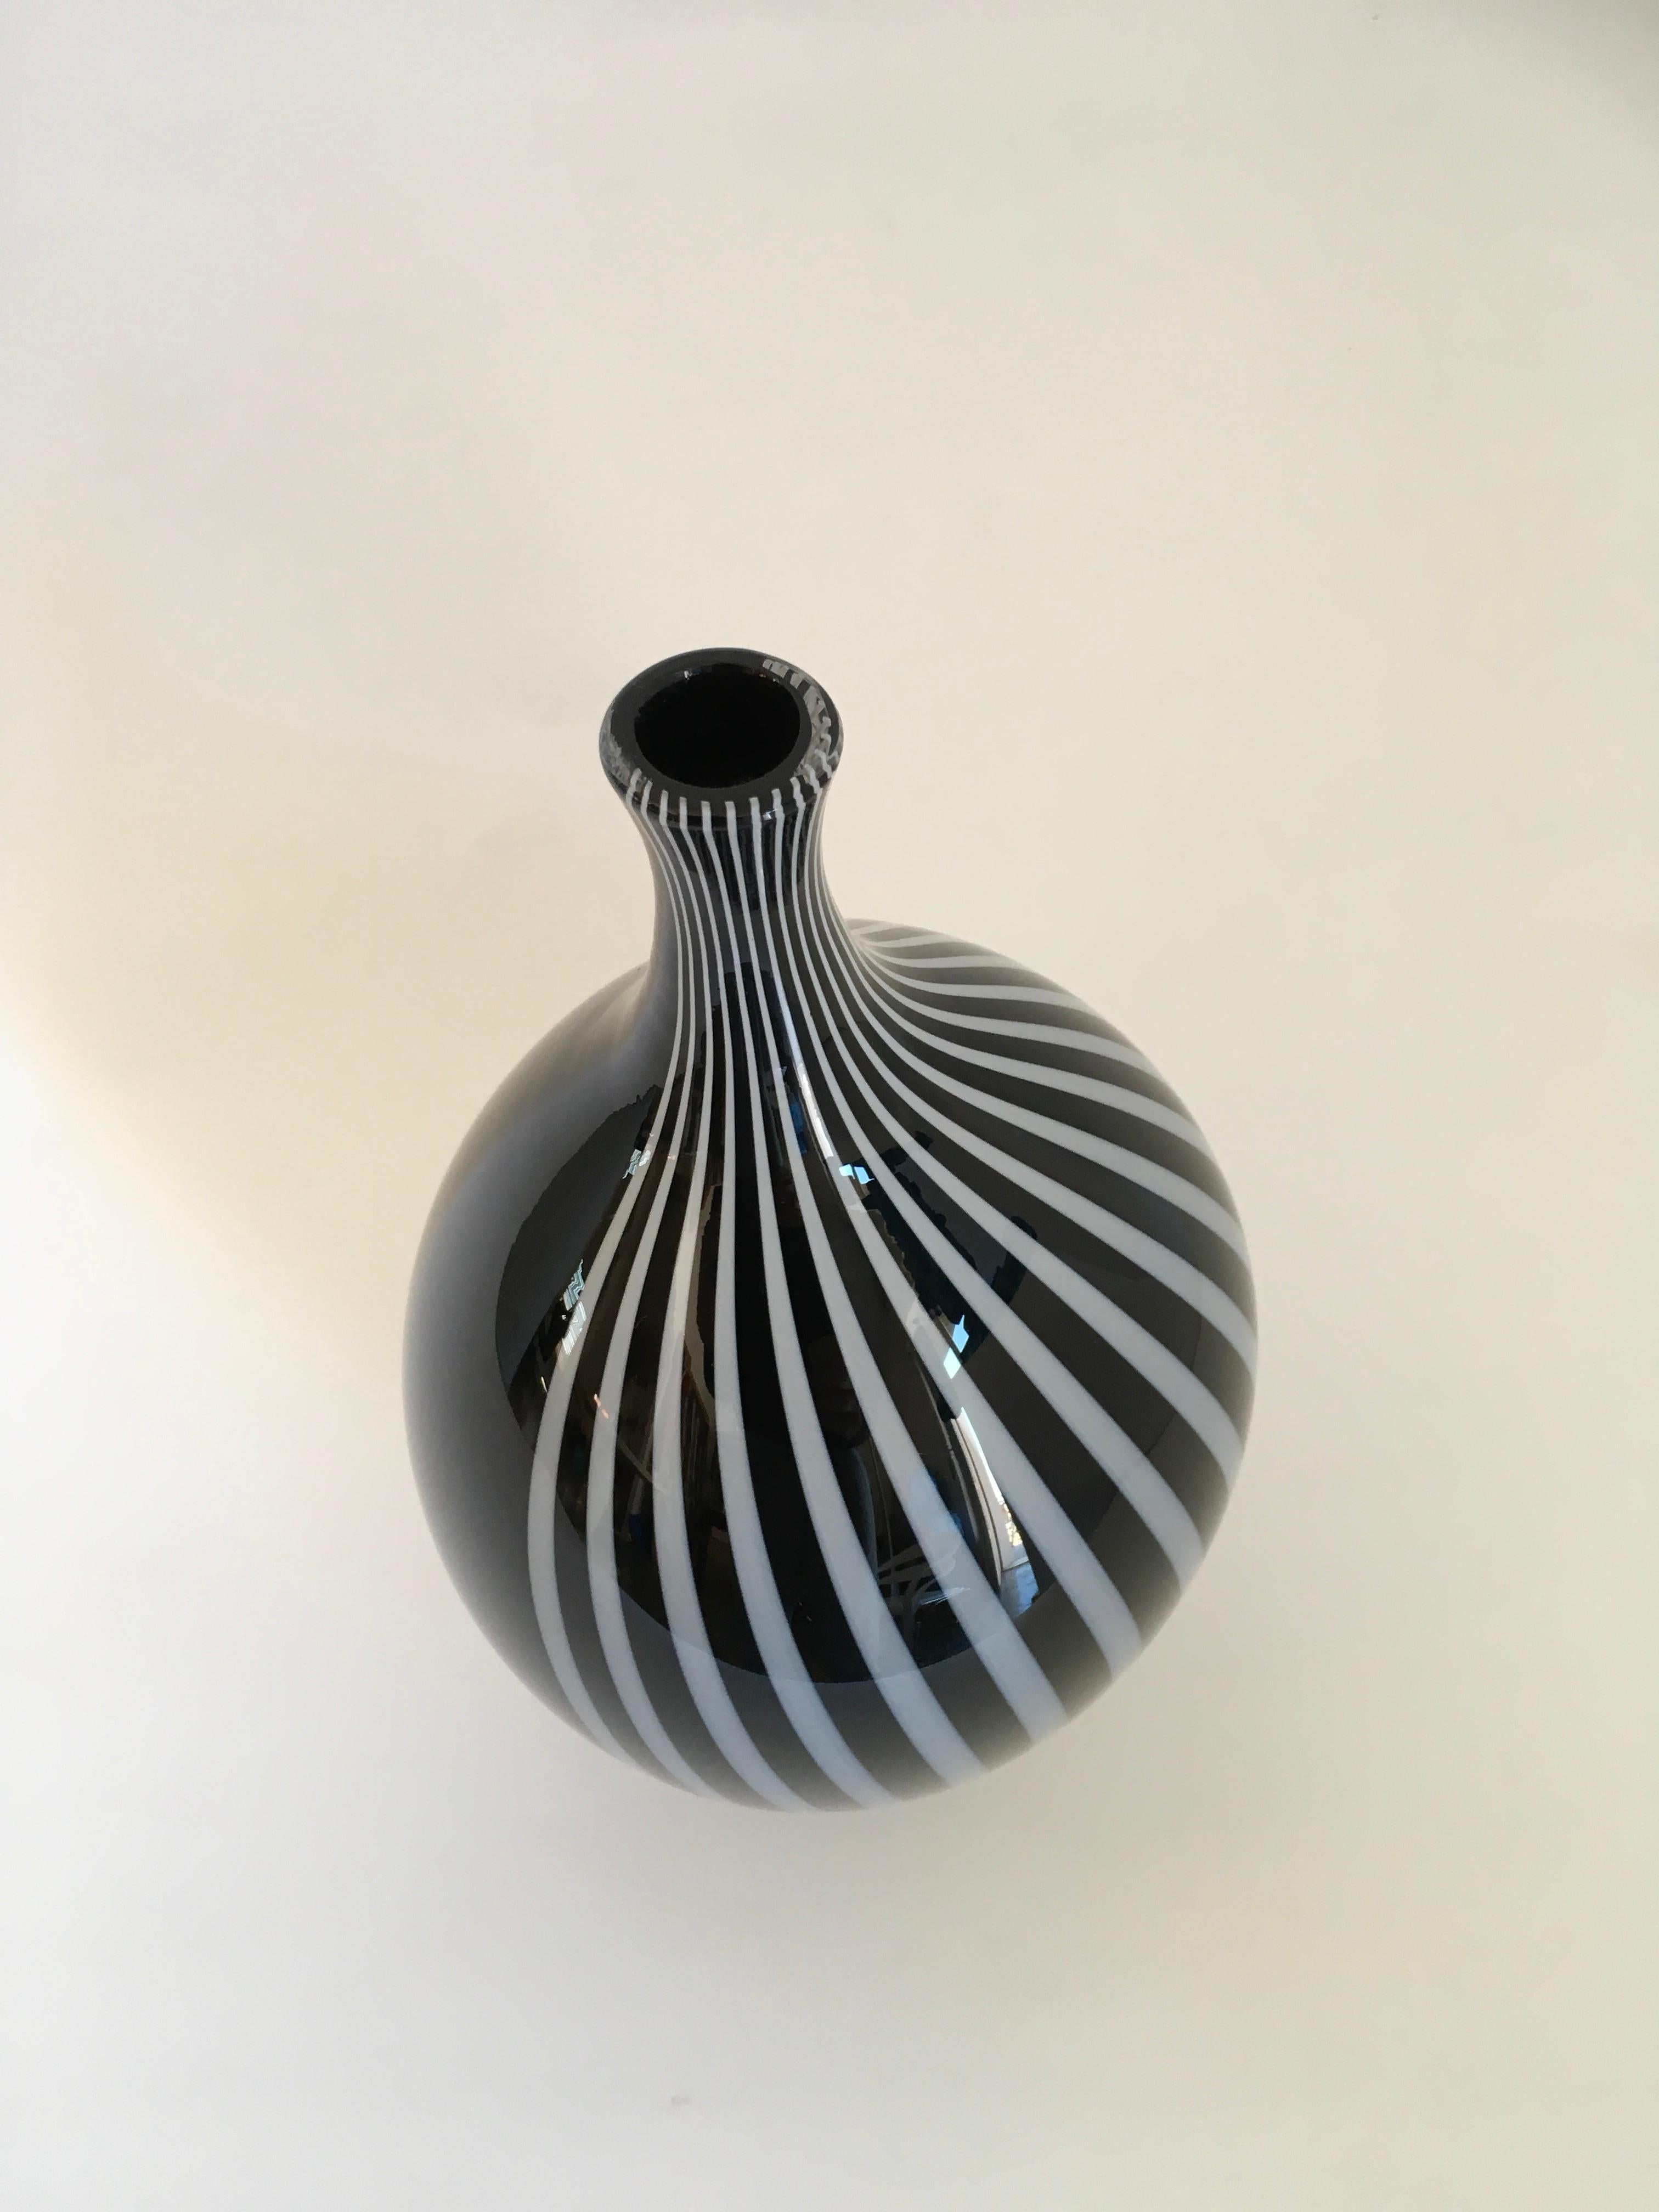 Late 20th Century Italia Murano Glass Vase Giano Model by Lino Tagliapieta for F3 International.